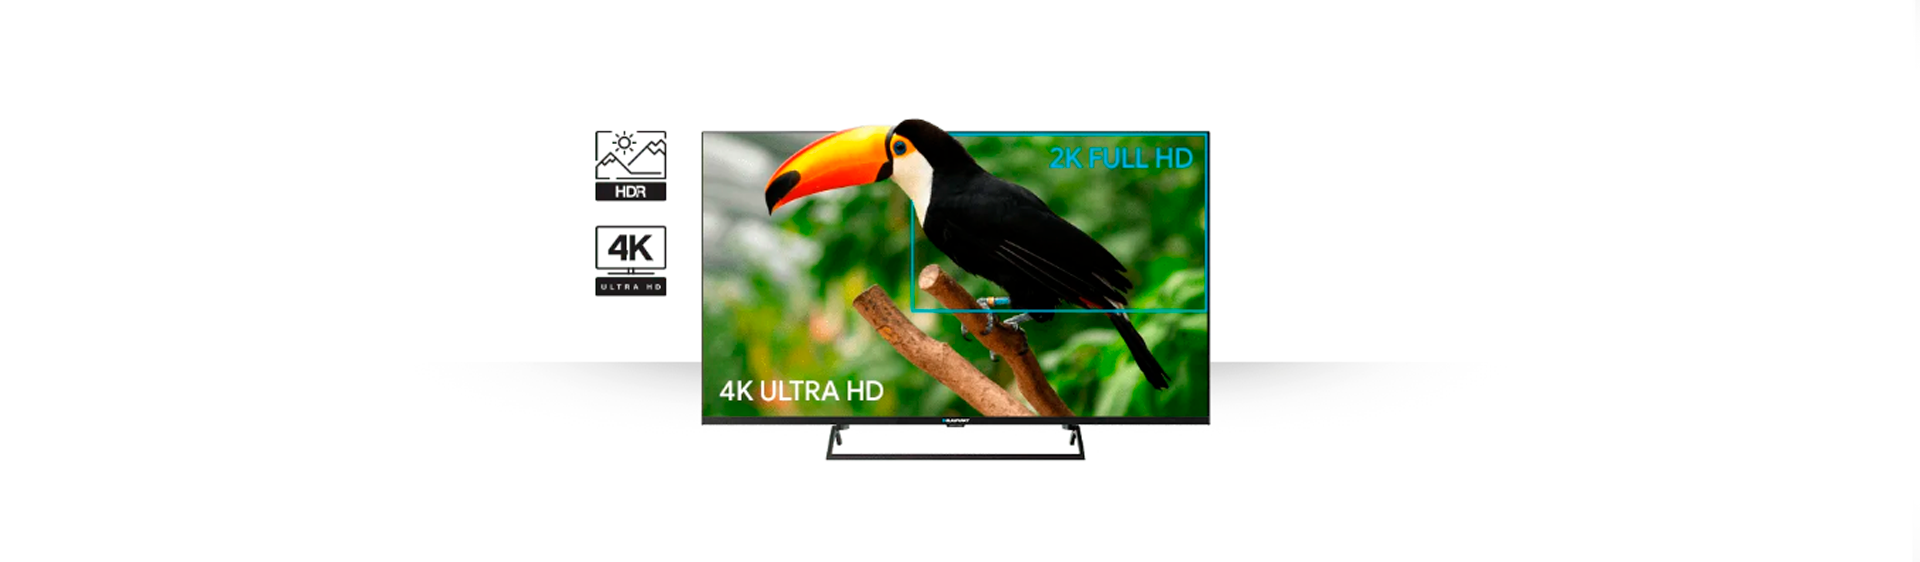 UHD 4K Android TV Blaupunkt 43UB7000